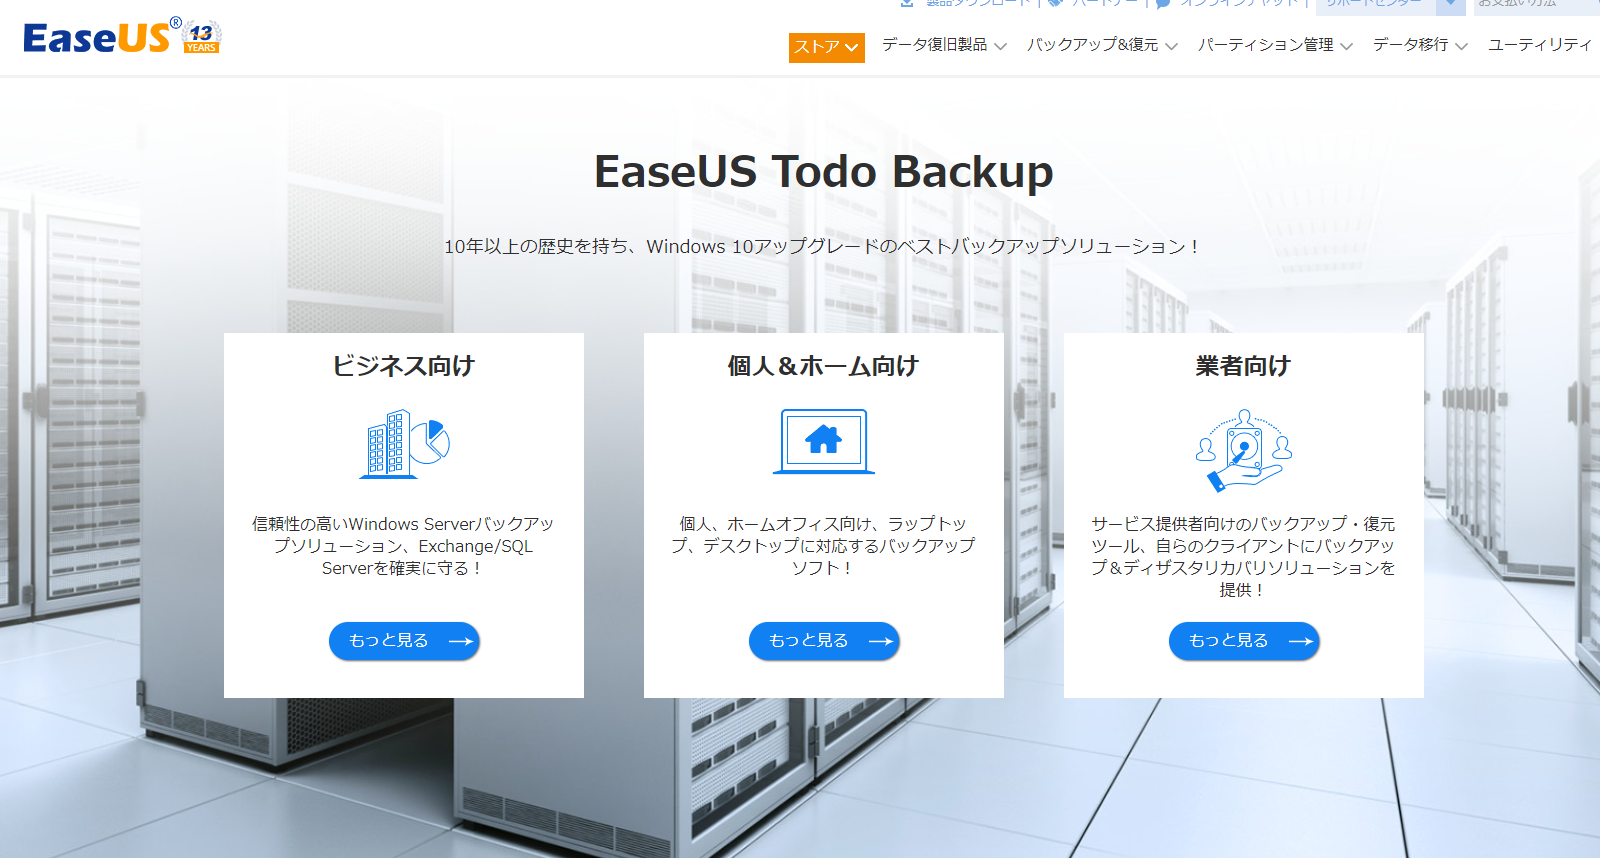 Windows 10更改に役立つ安価なバックアップツール、EaseUS Todo Backup